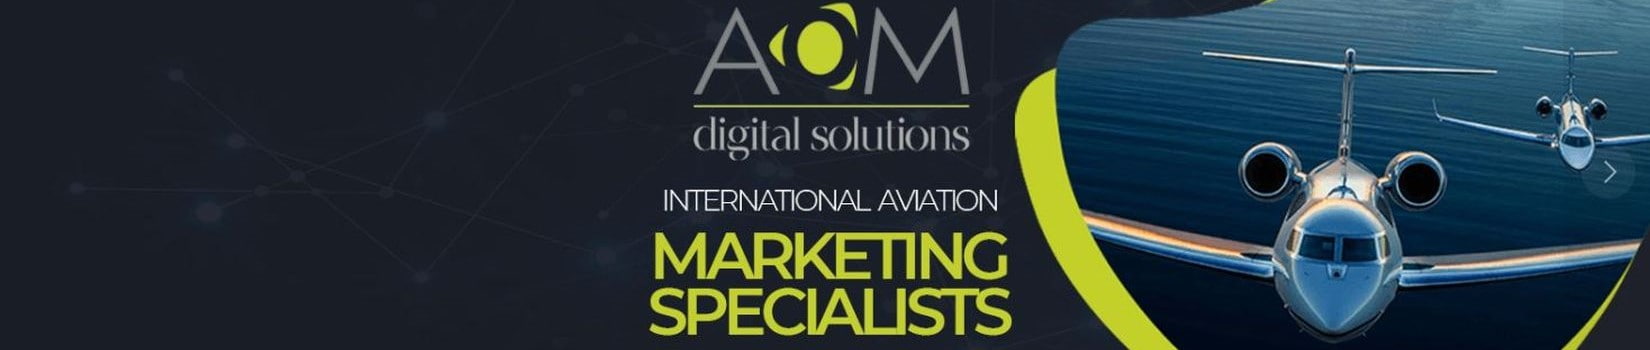 AOM - Aviation Digital Marketing